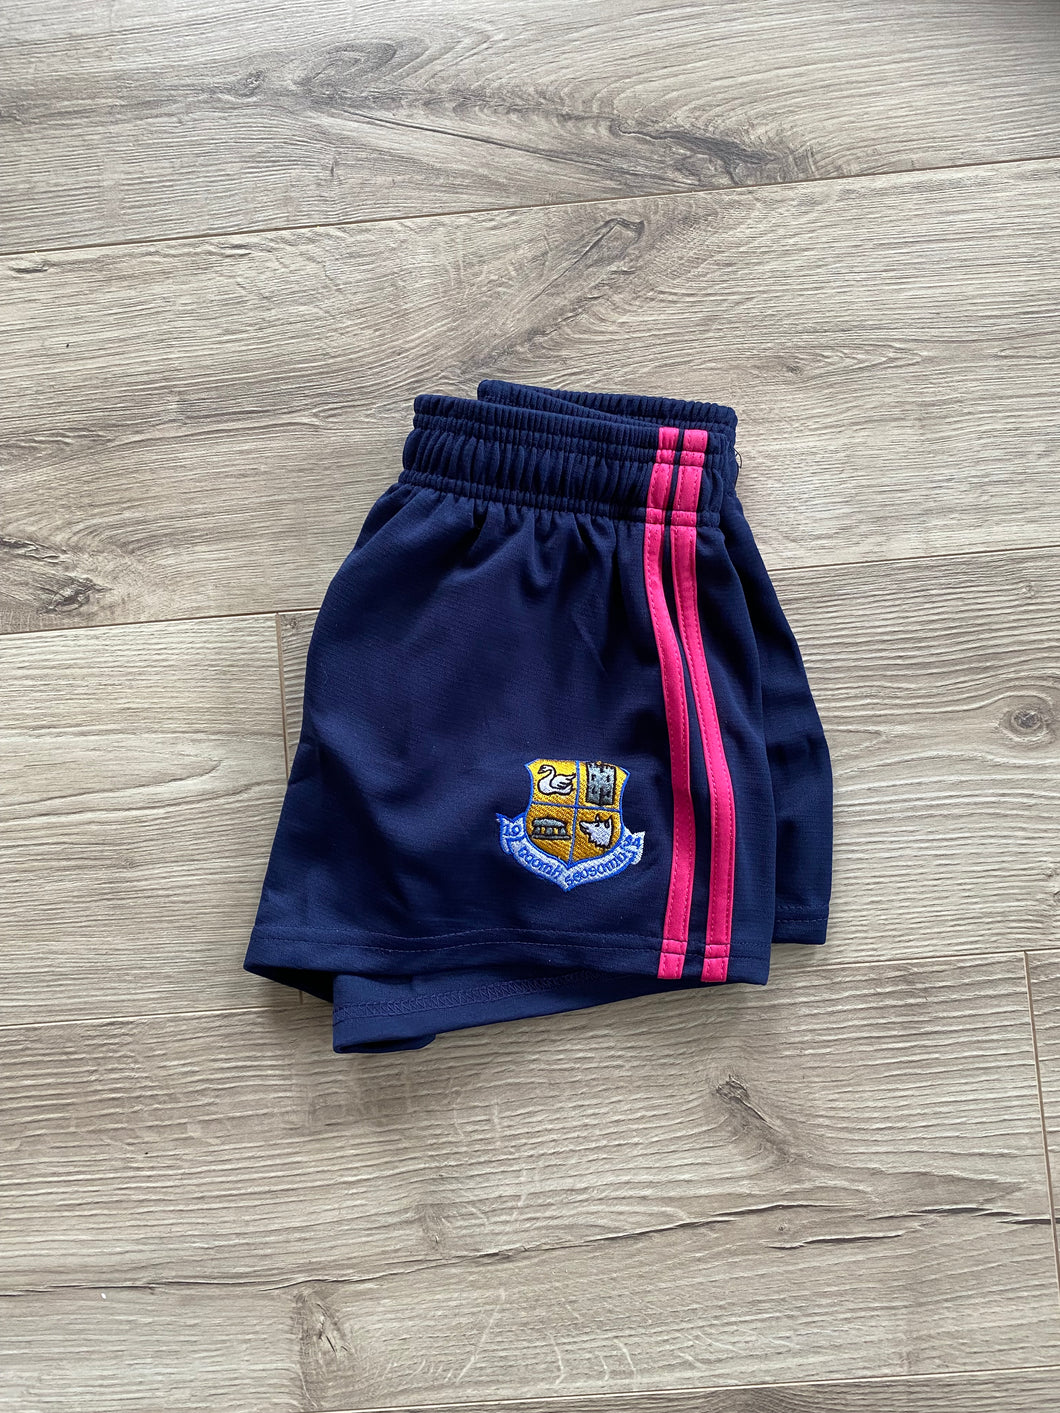 GAA Shorts (Navy/Pink) - St Joseph's